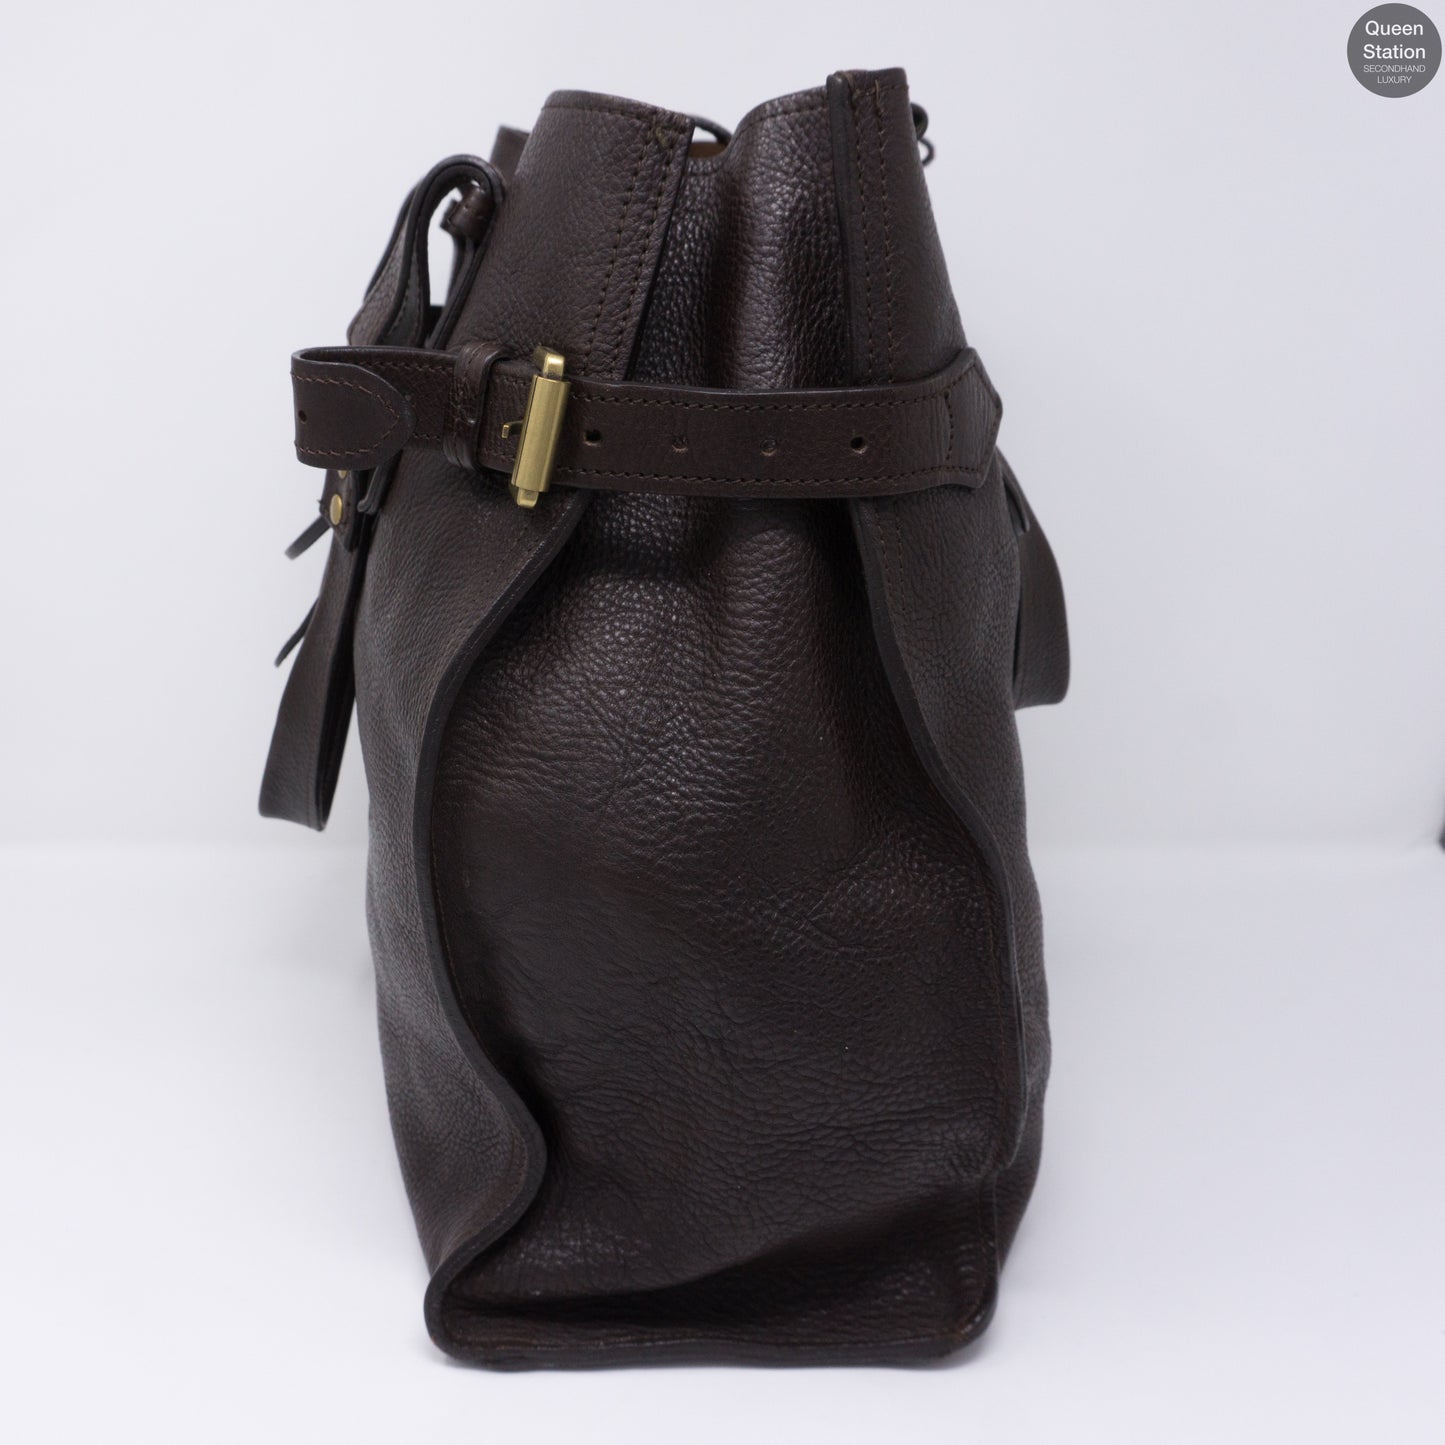 Elgin Brown Leather Satchel Bag